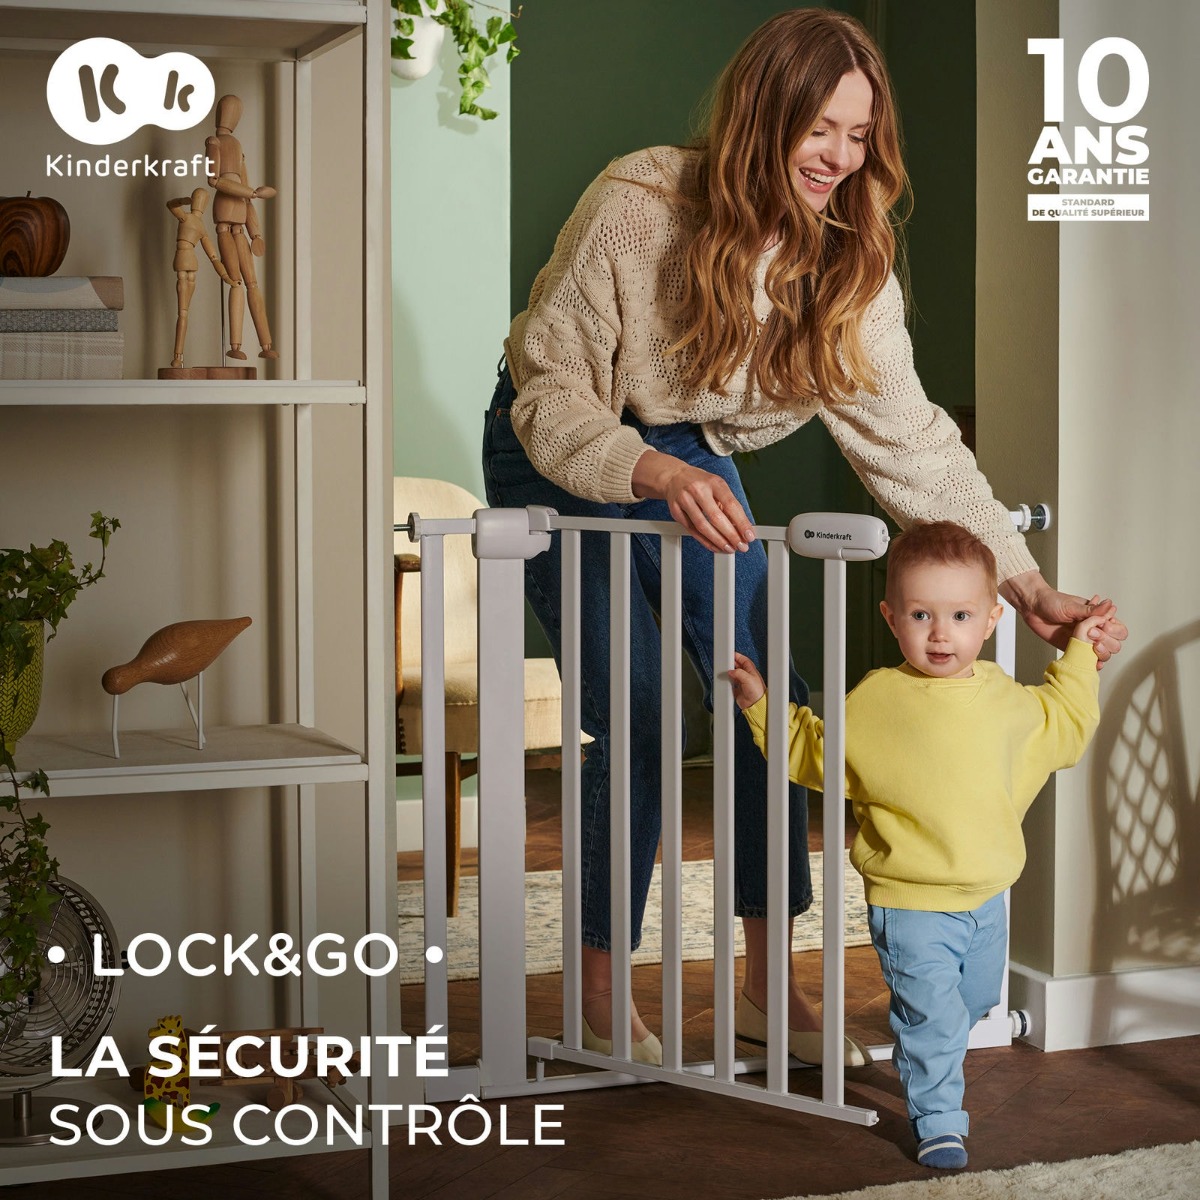 2FR-KK-lock-go-bois-la-securite